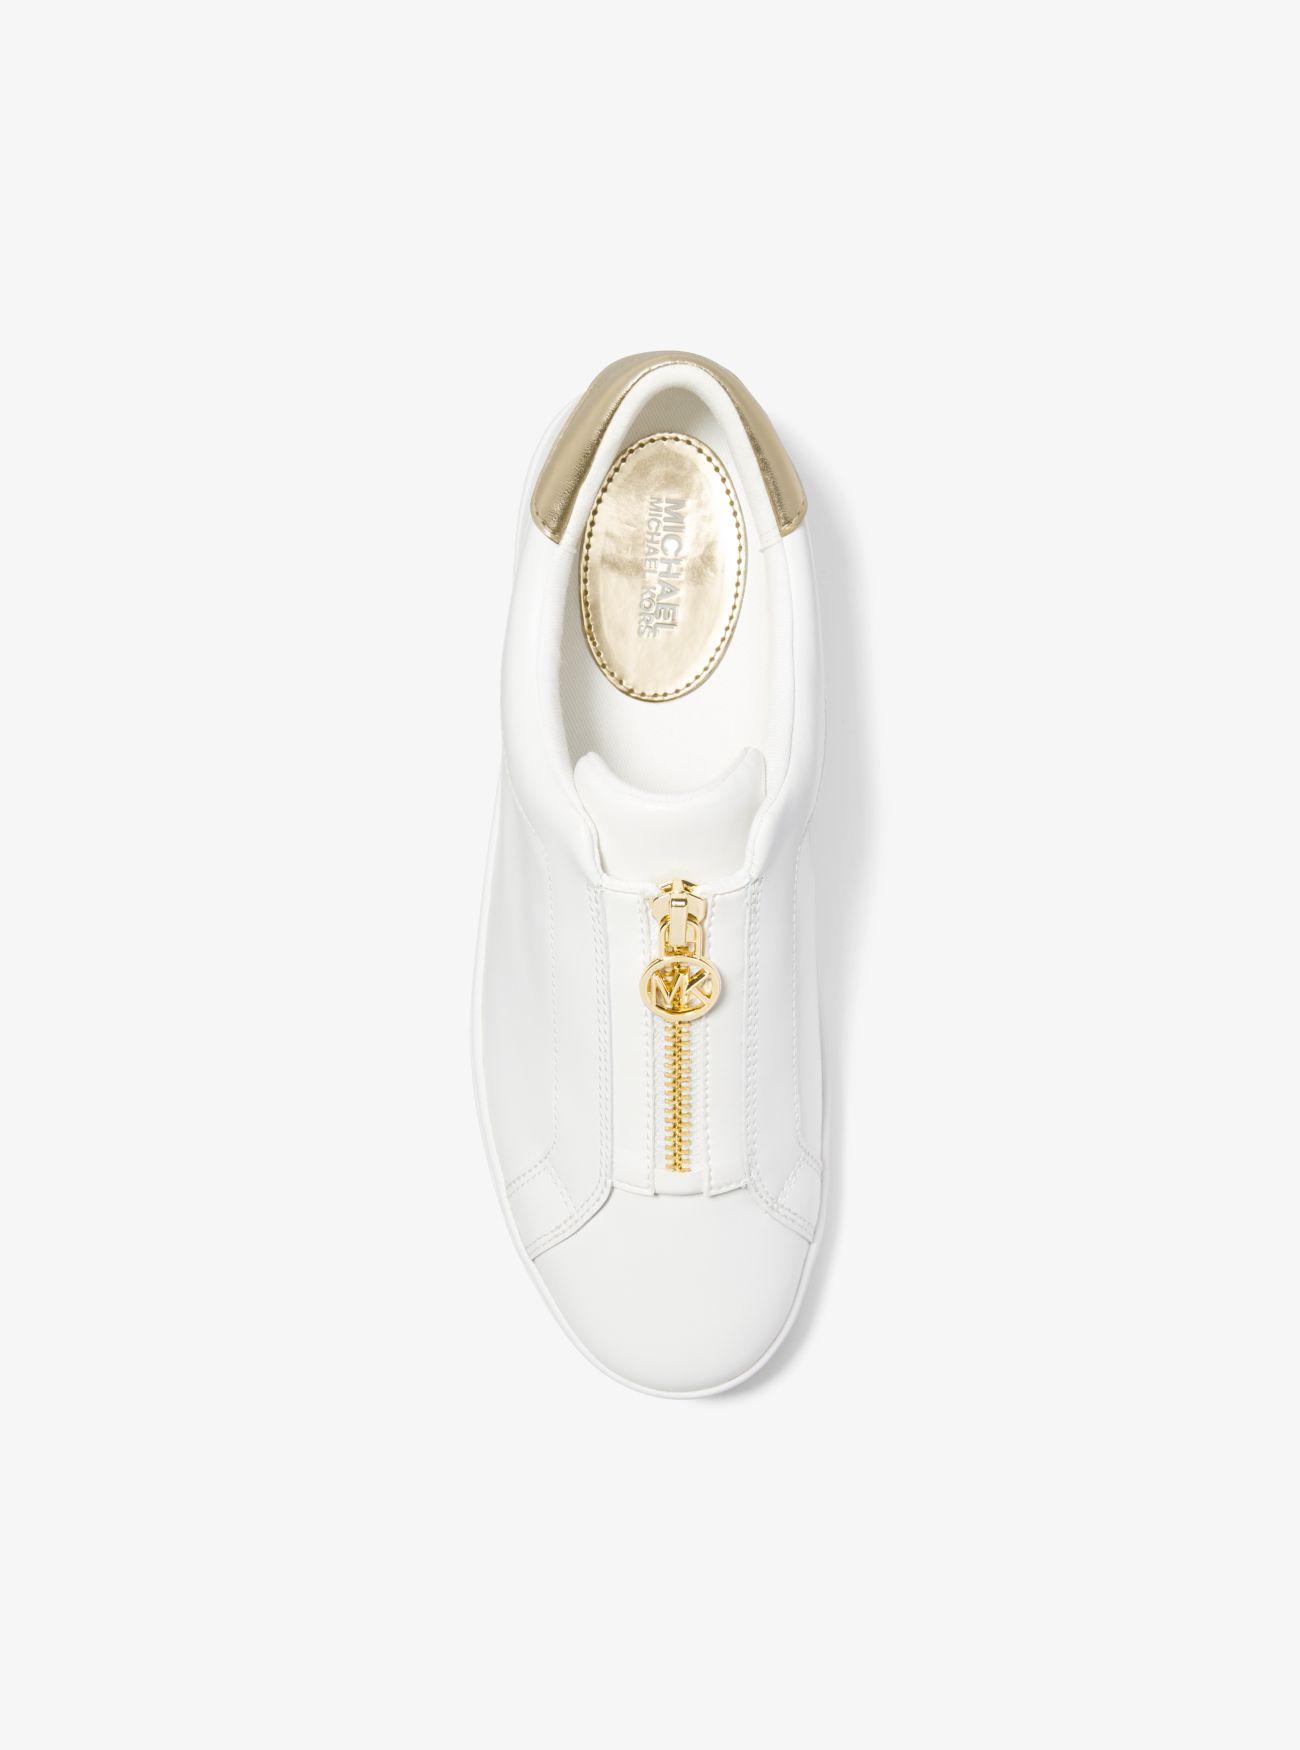 Michael Kors Keaton Leather Zip-up Sneaker in White | Lyst UK